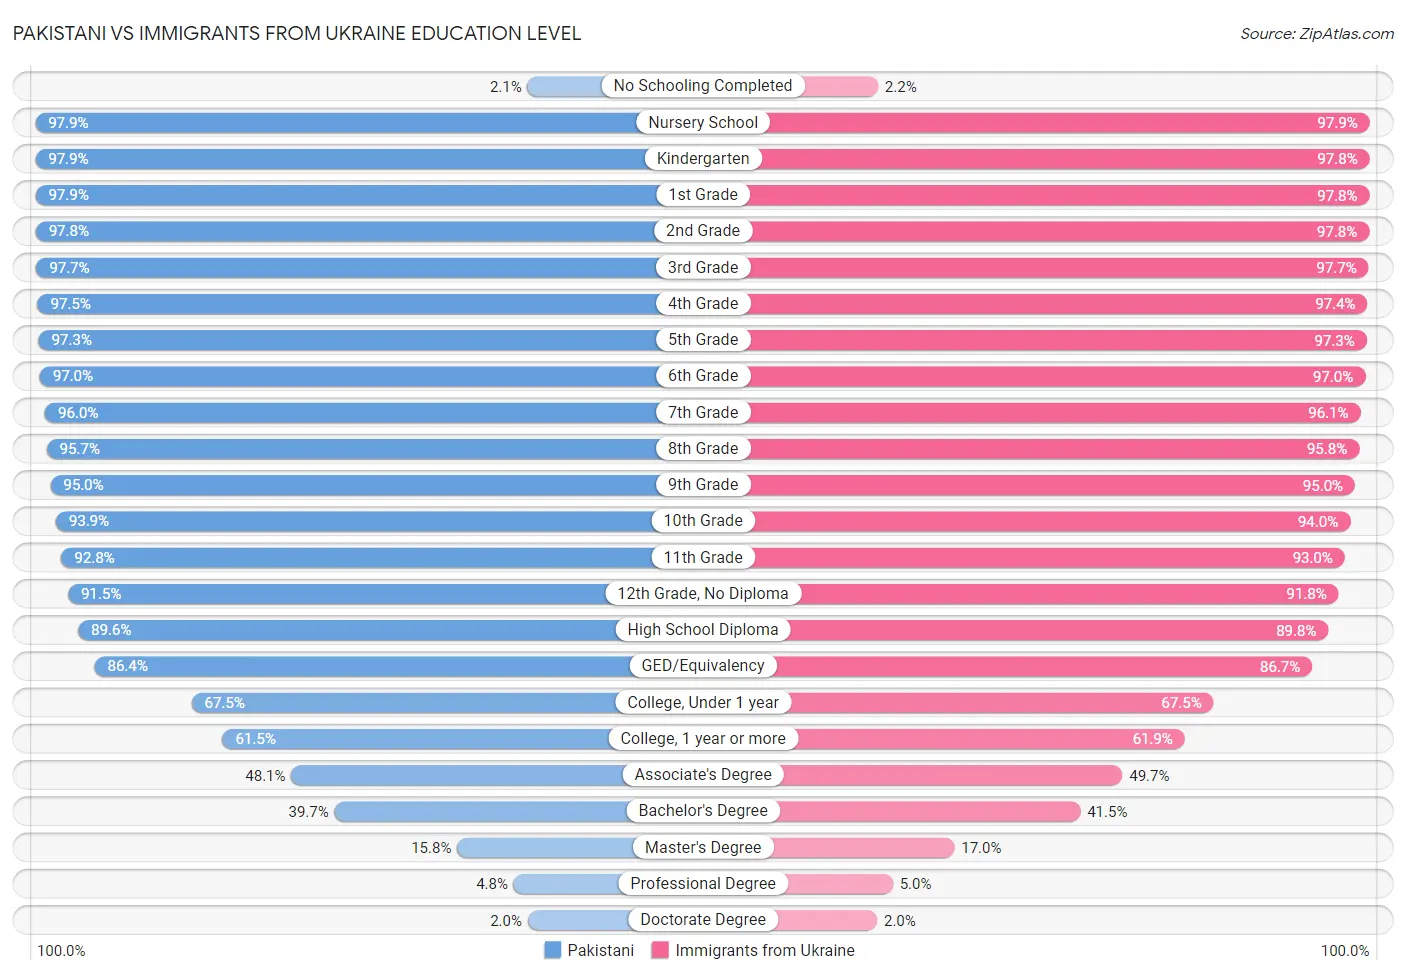 Pakistani vs Immigrants from Ukraine Education Level